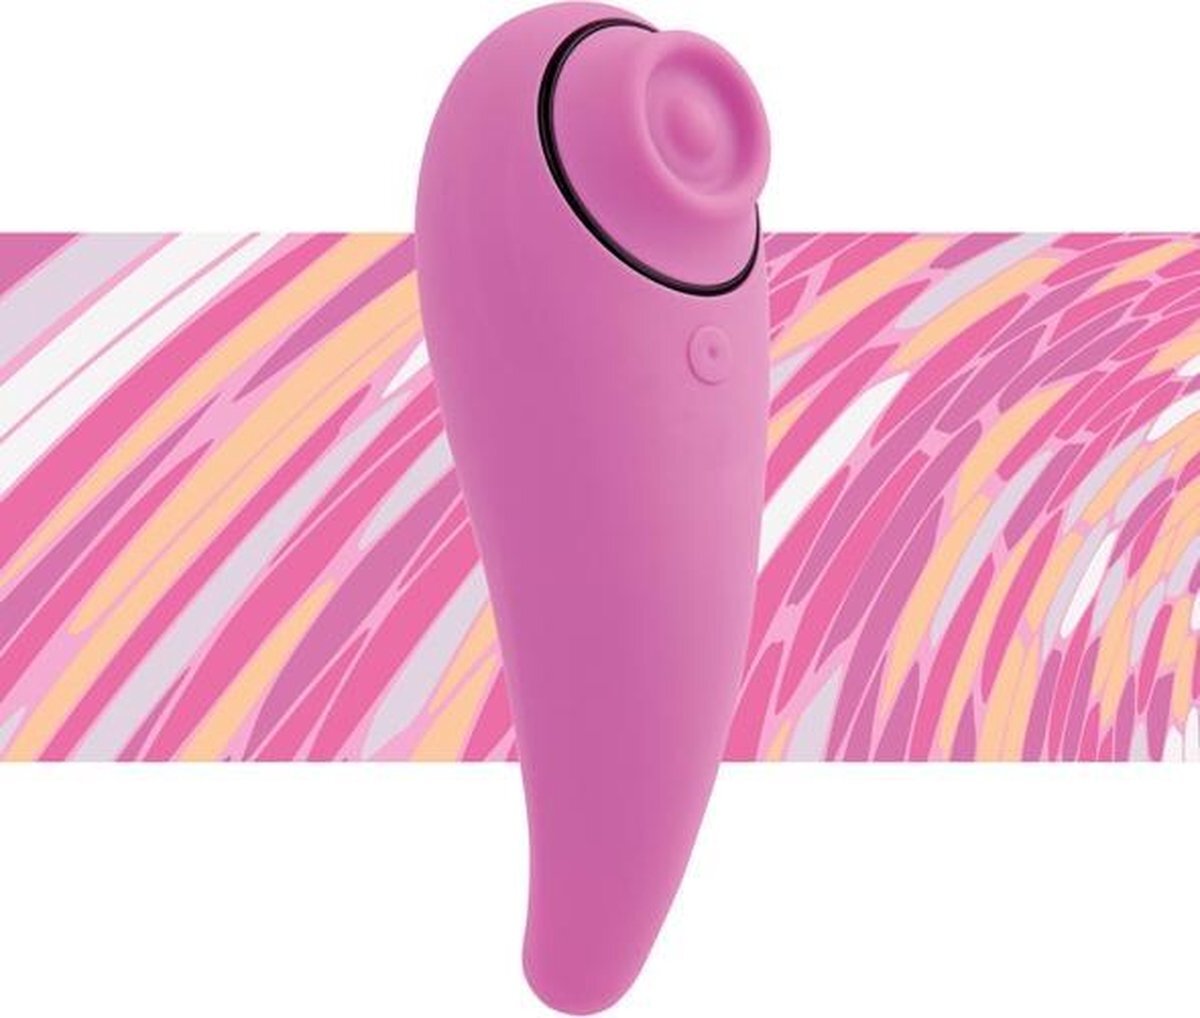 FeelzToys - FemmeGasm Air Pressured Tapping & Tickling Vibrator Pink - Vibrator